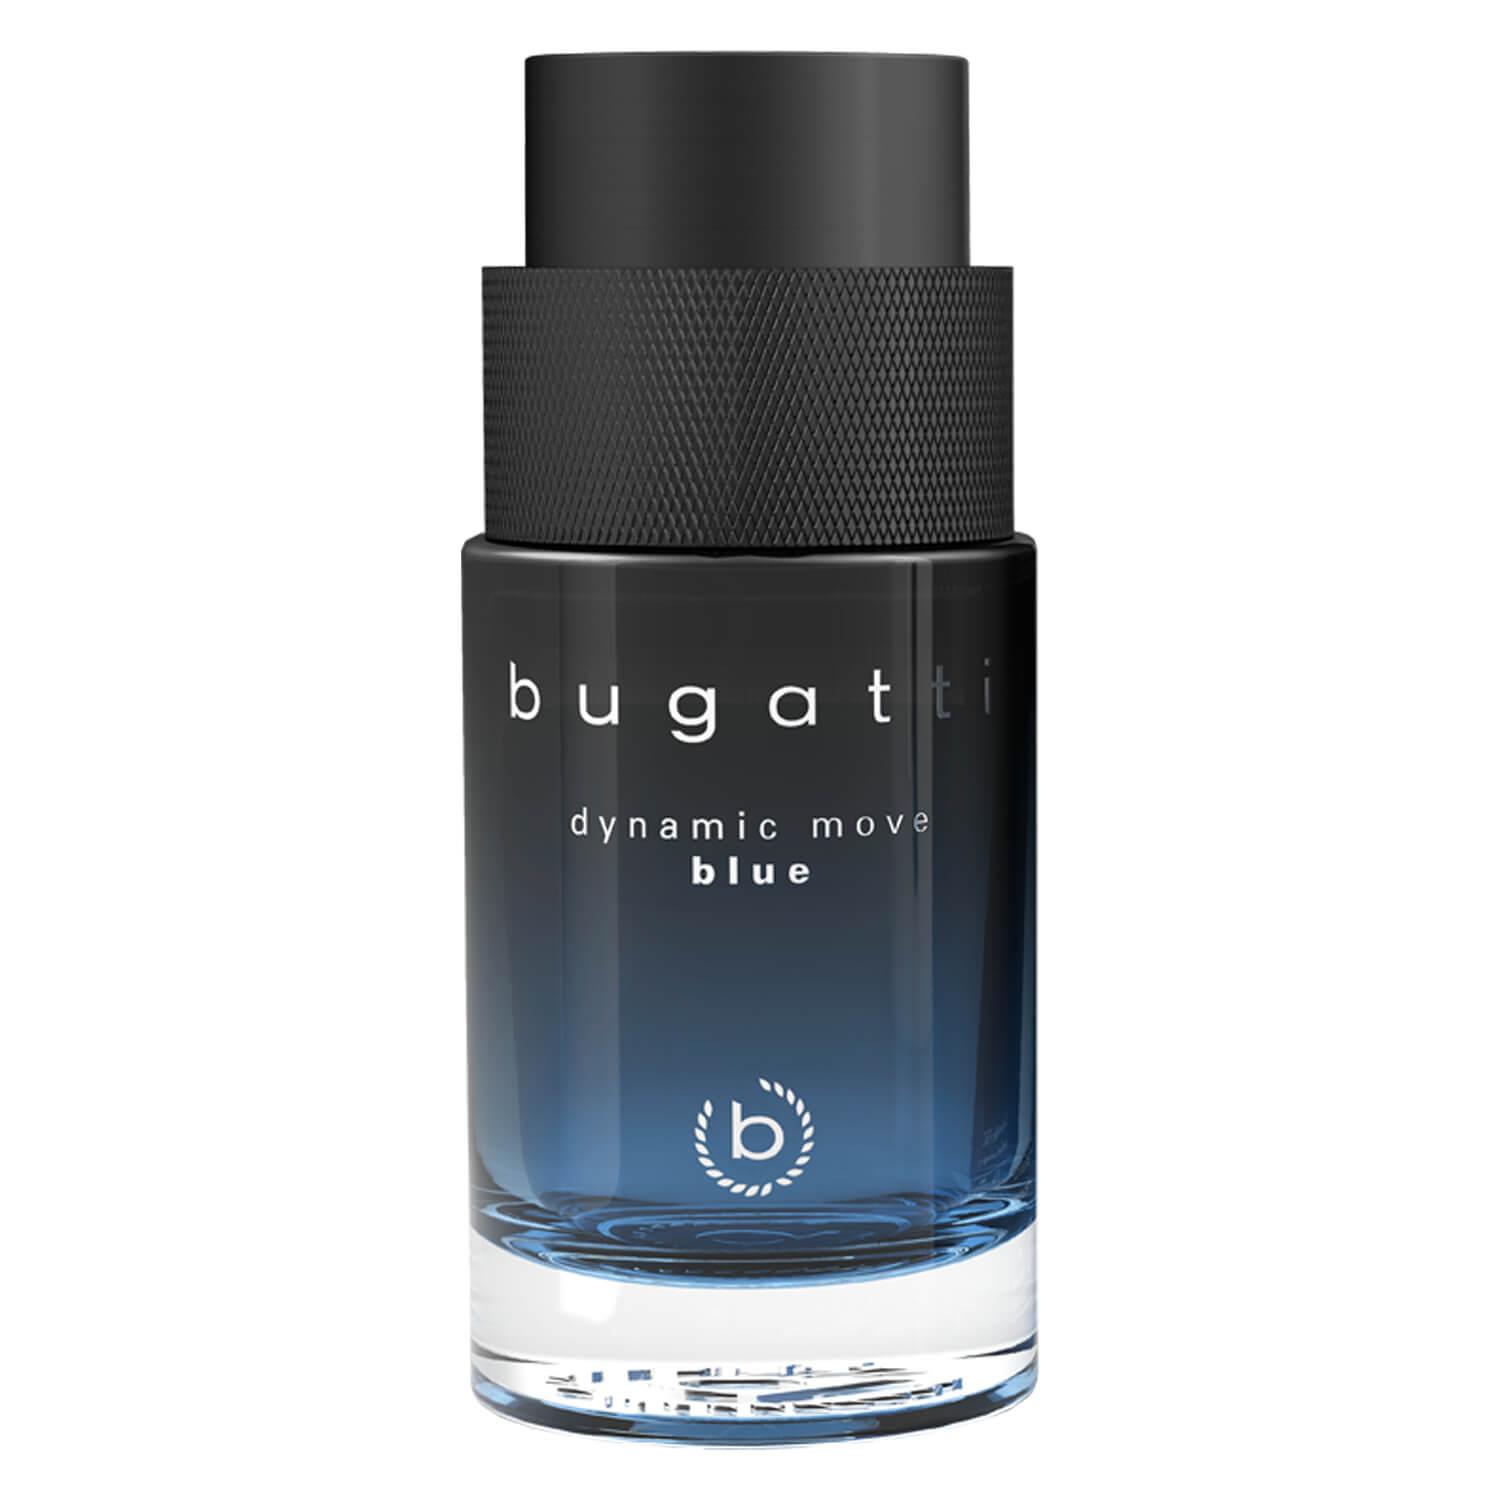 bugatti - Dynamic Move Blue Eau de Toilette